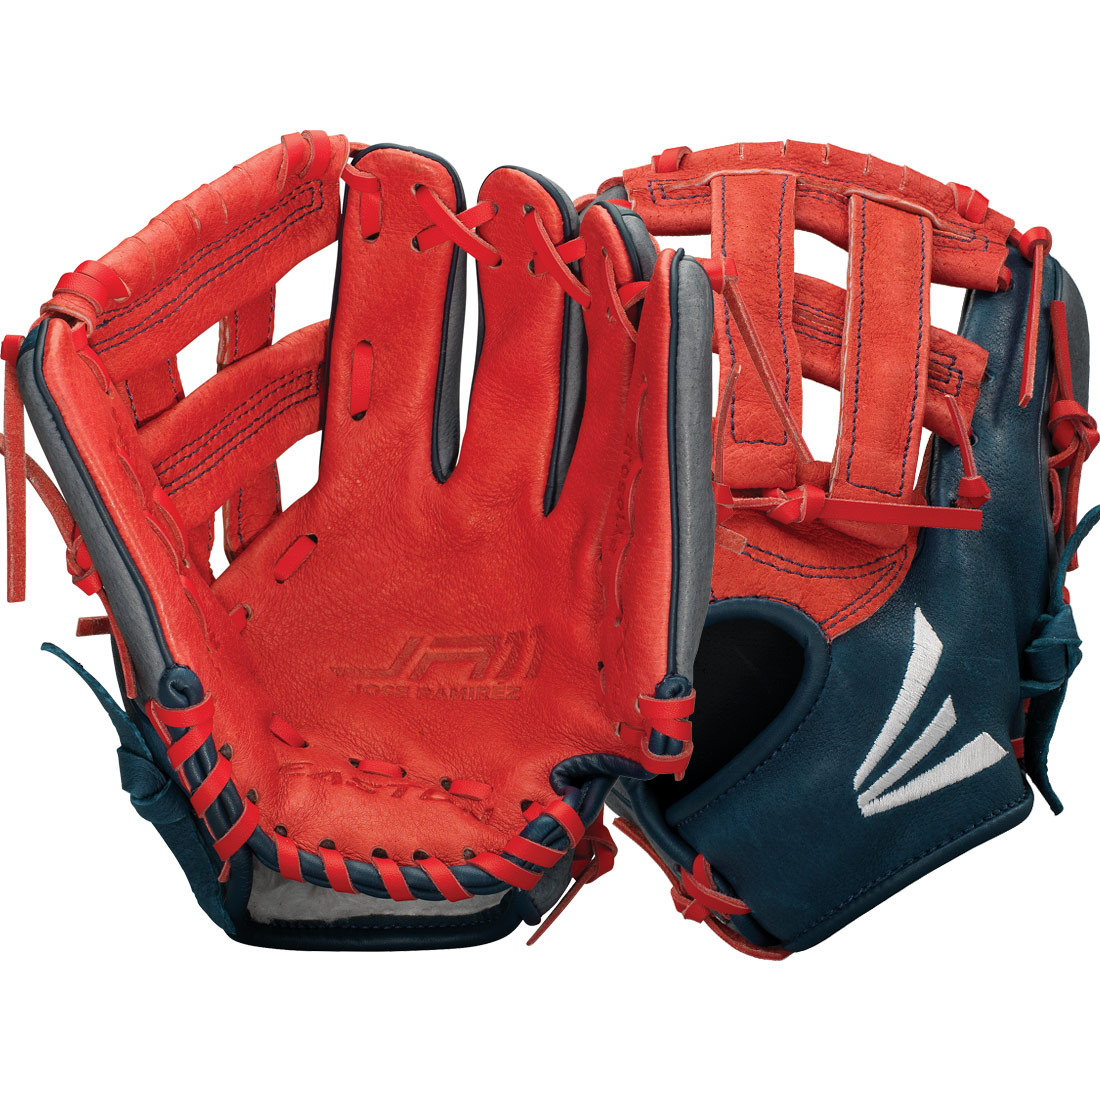 Easton Jose Ramirez Professional Youth Baseball Glove 10.5\" PY1050